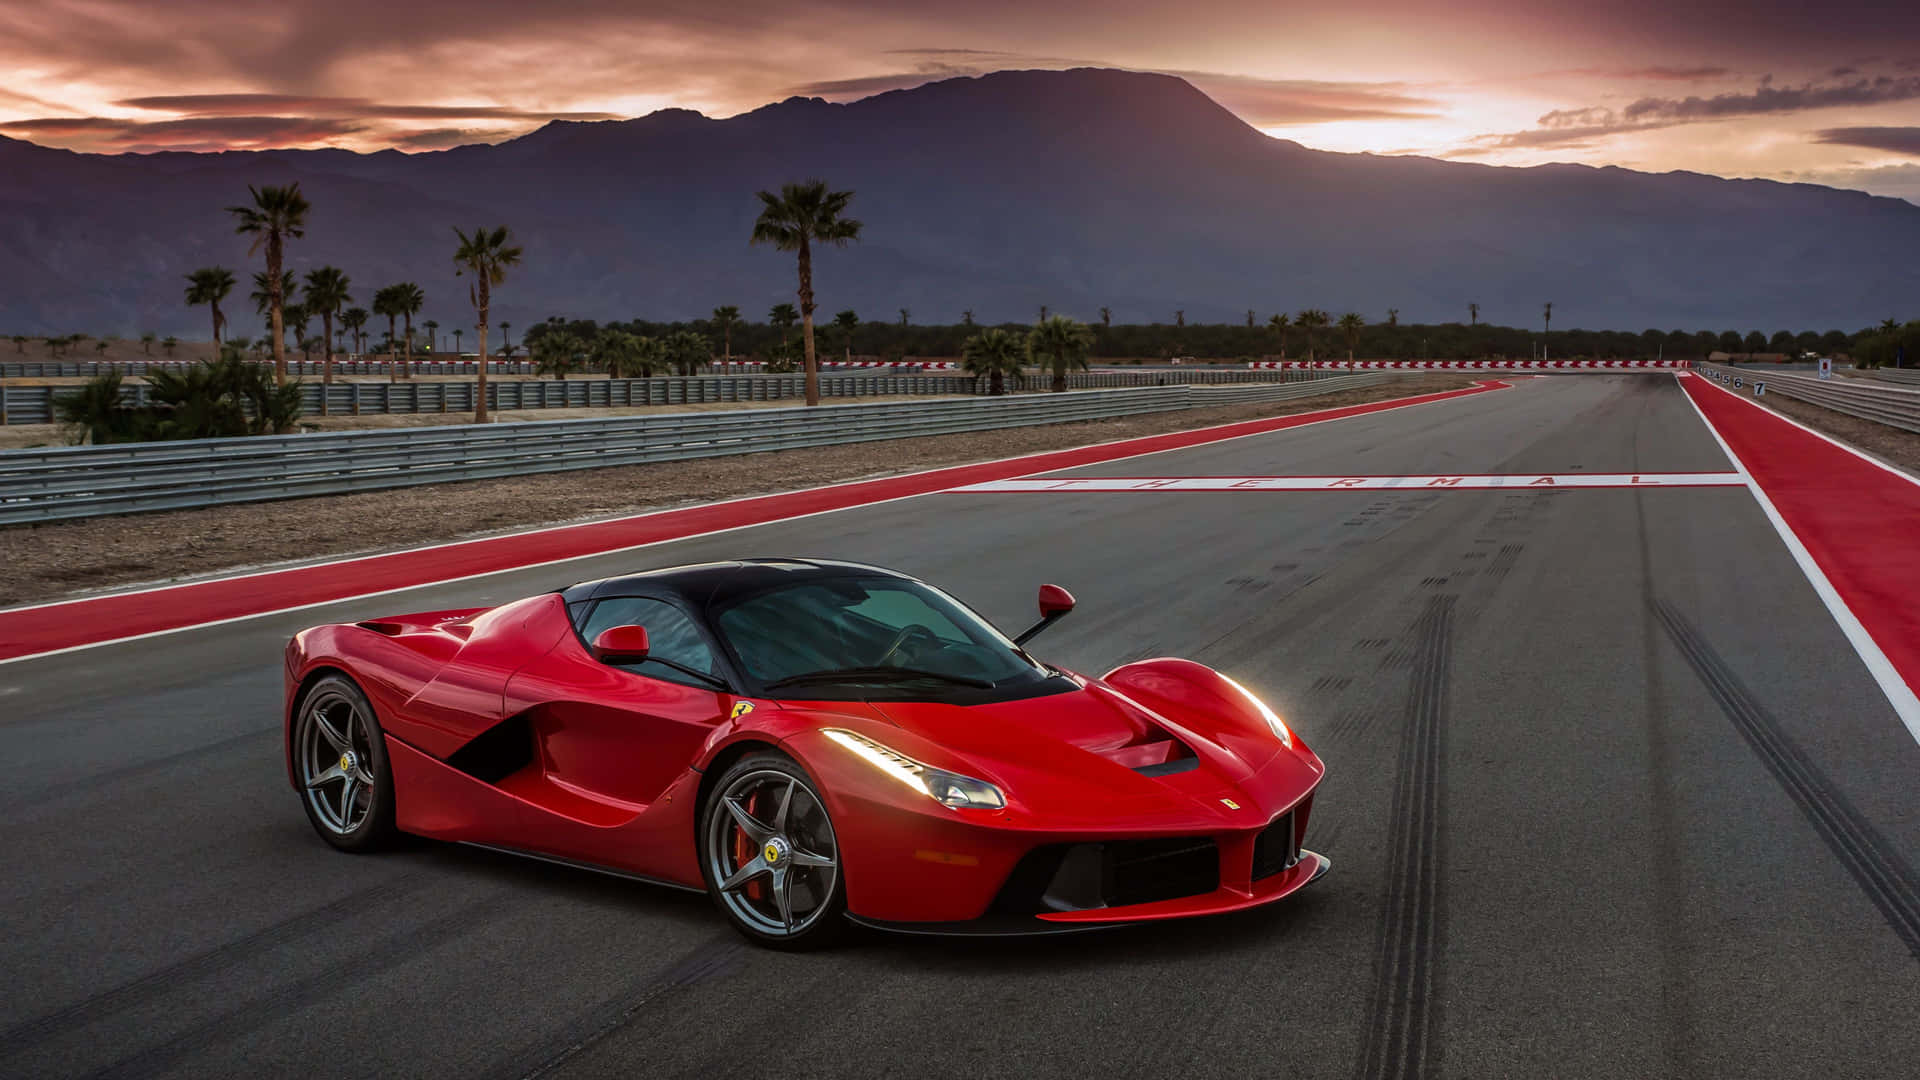 Ride in style in a luxurious Ferrari